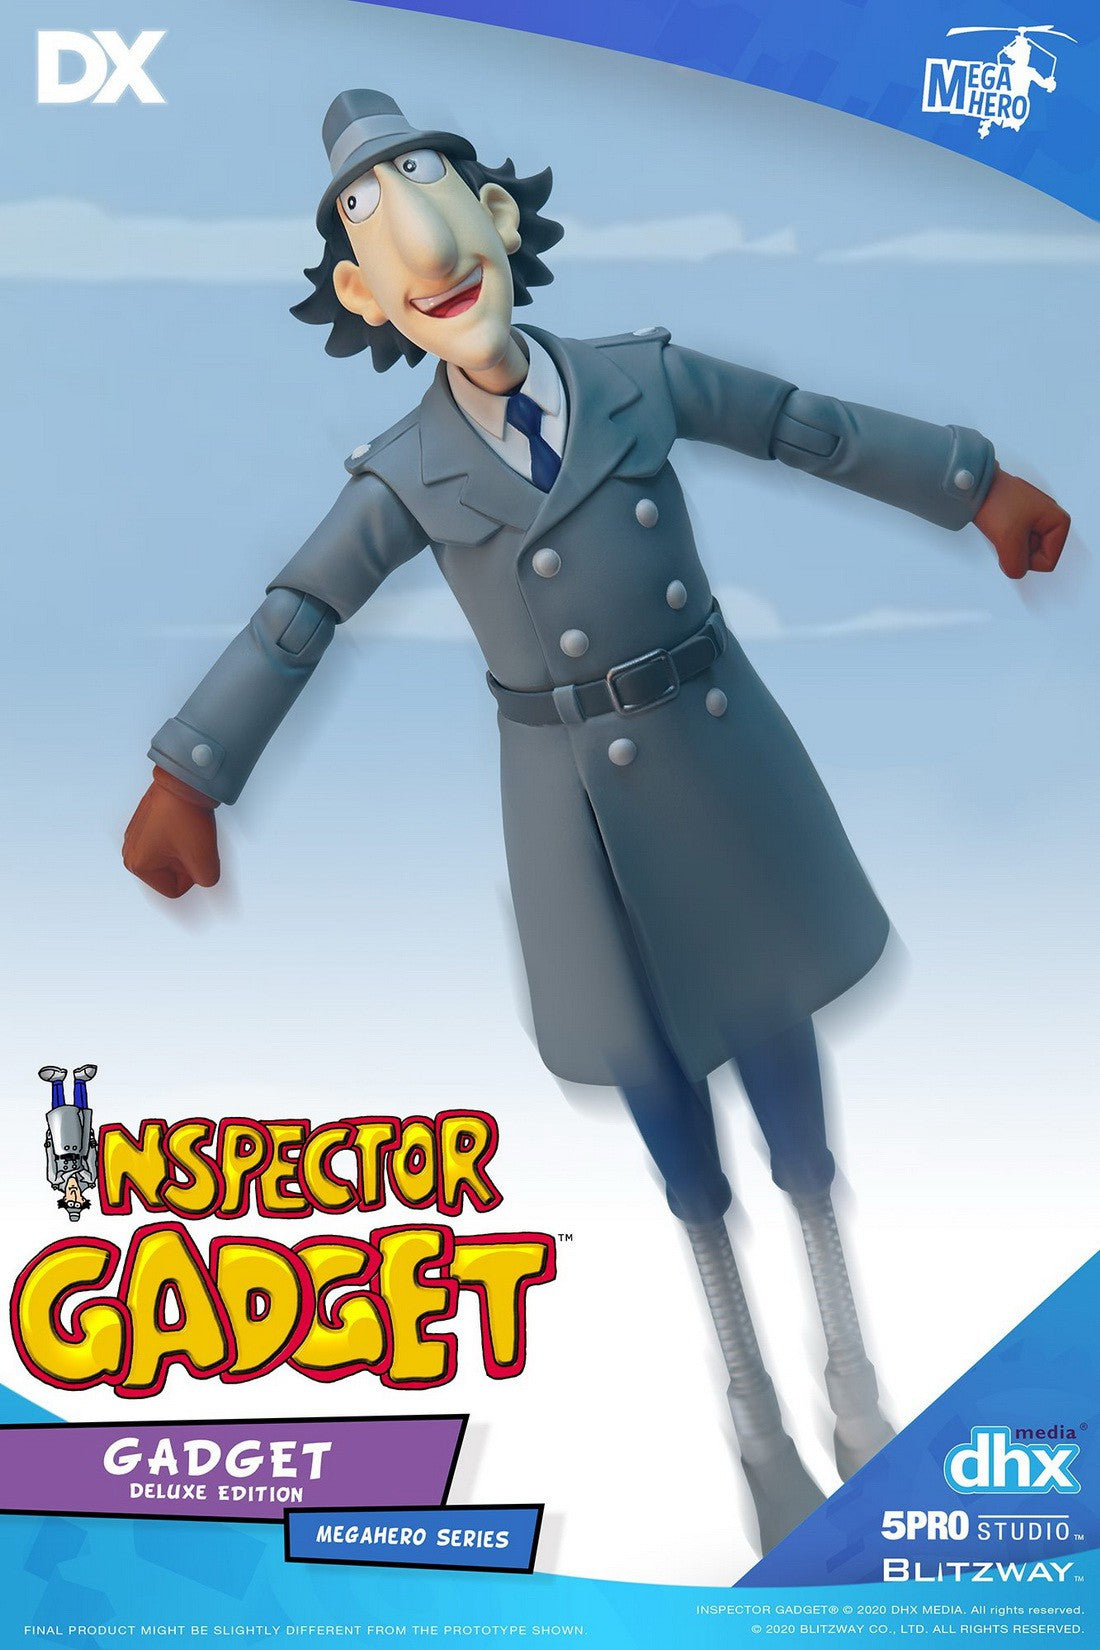 [Indent] 5pro x Blitzway Inspector Gadget 1:12